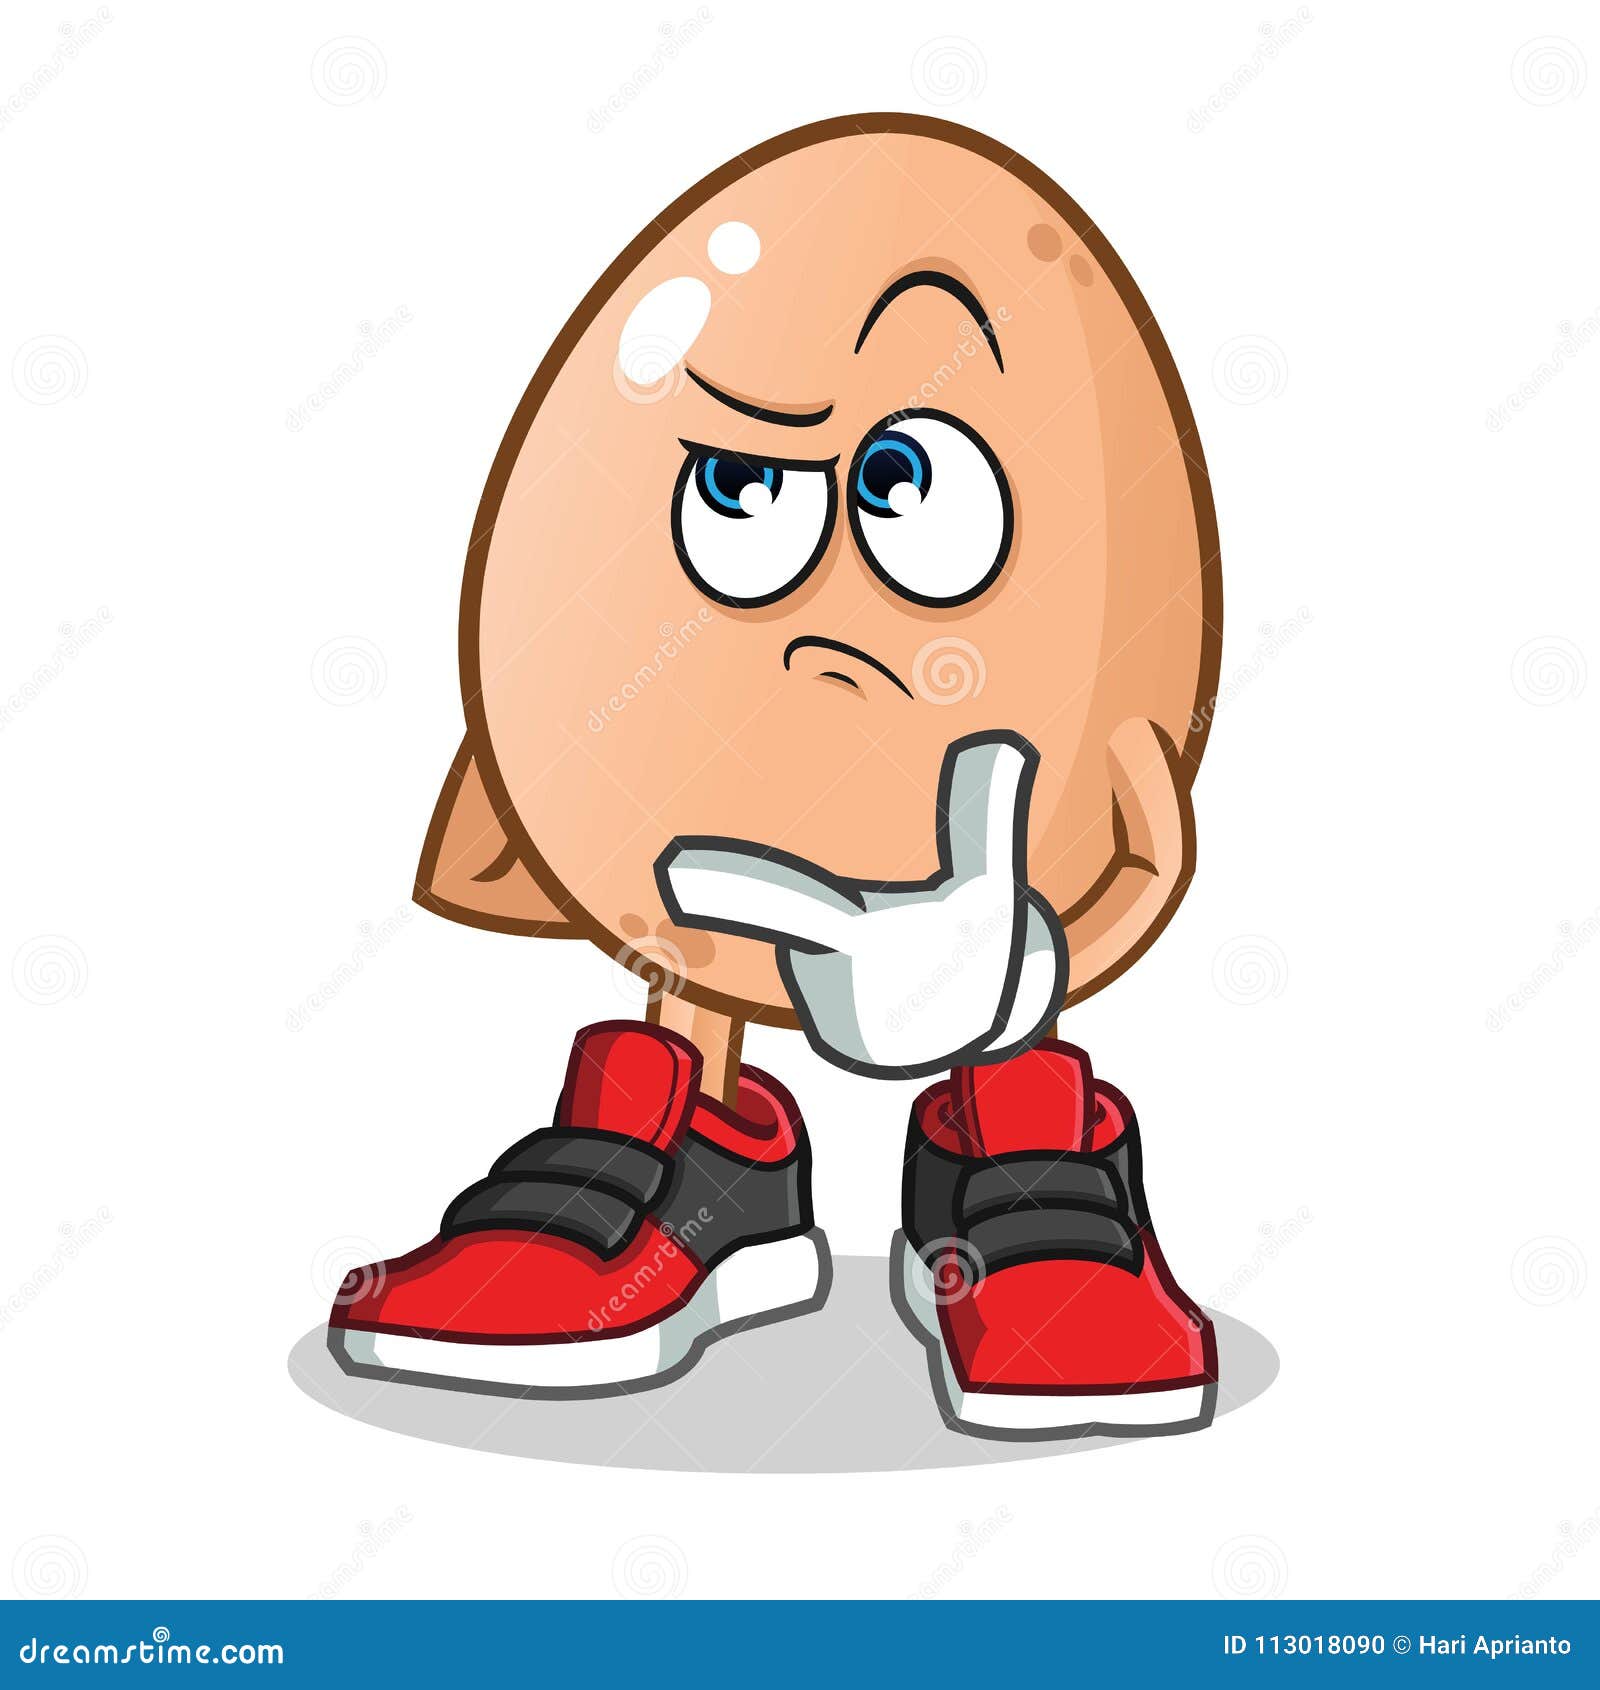 https://thumbs.dreamstime.com/z/egg-thinking-mascot-vector-cartoon-illustration-original-character-egg-thinking-mascot-vector-cartoon-illustration-113018090.jpg